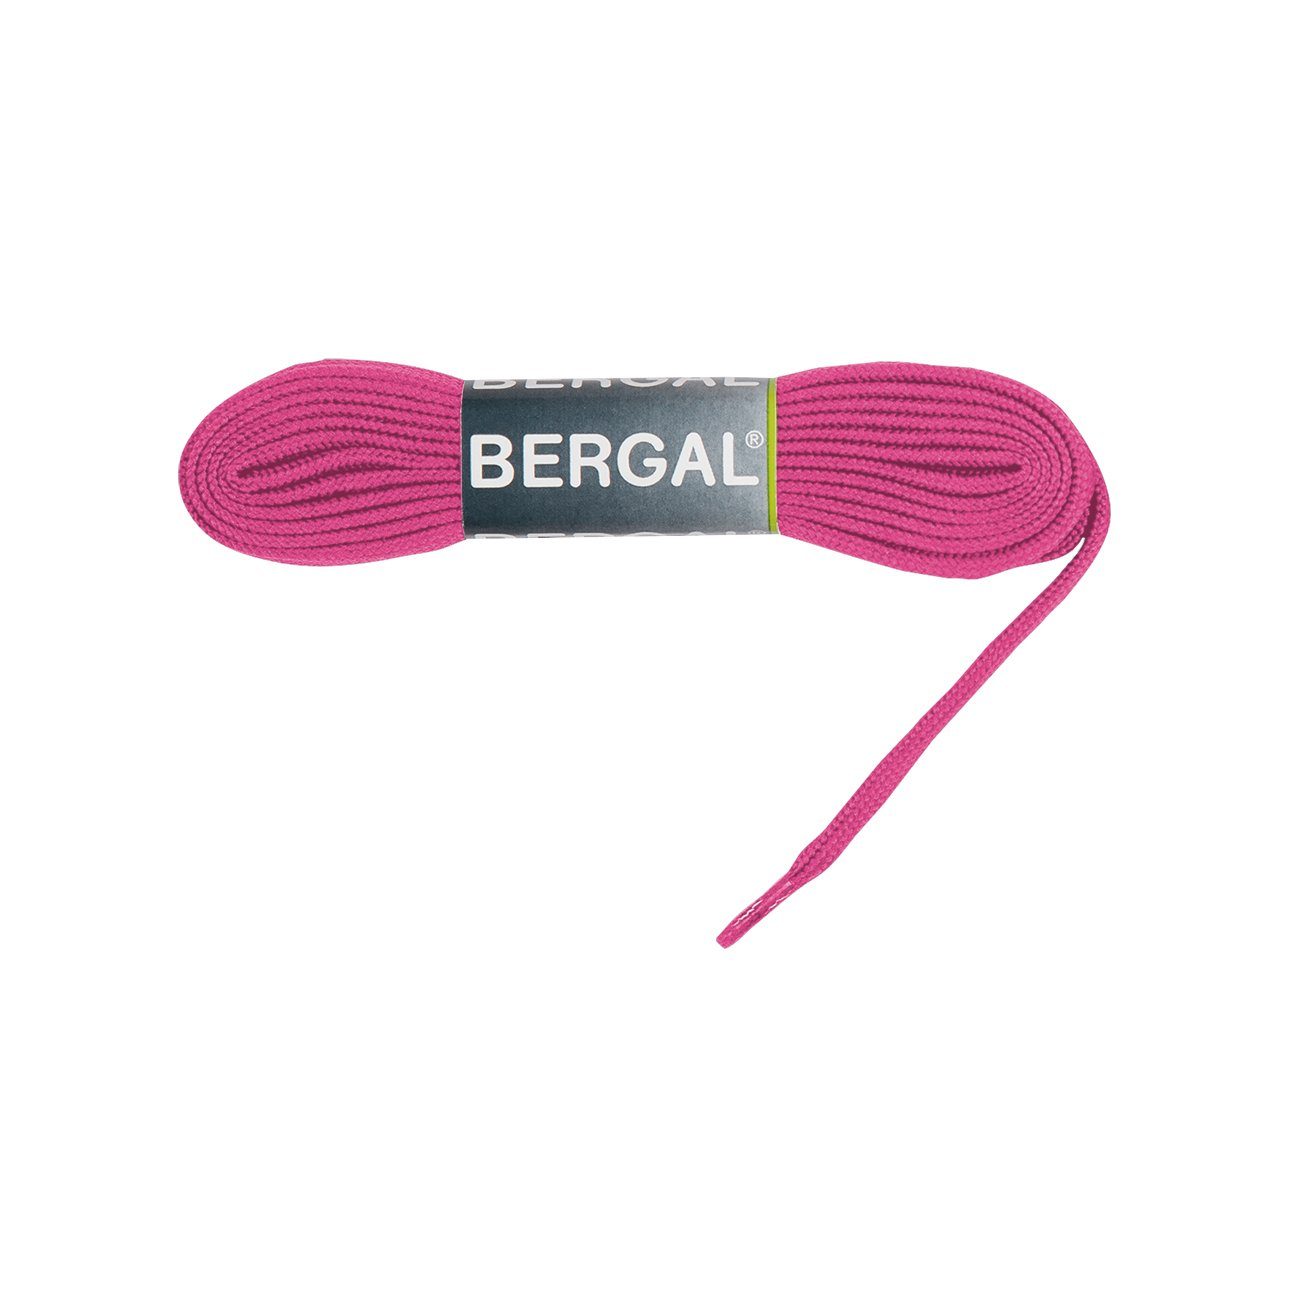 Bergal Schnürsenkel Sneaker Laces - Flach - 10 mm Breit Fuchsia